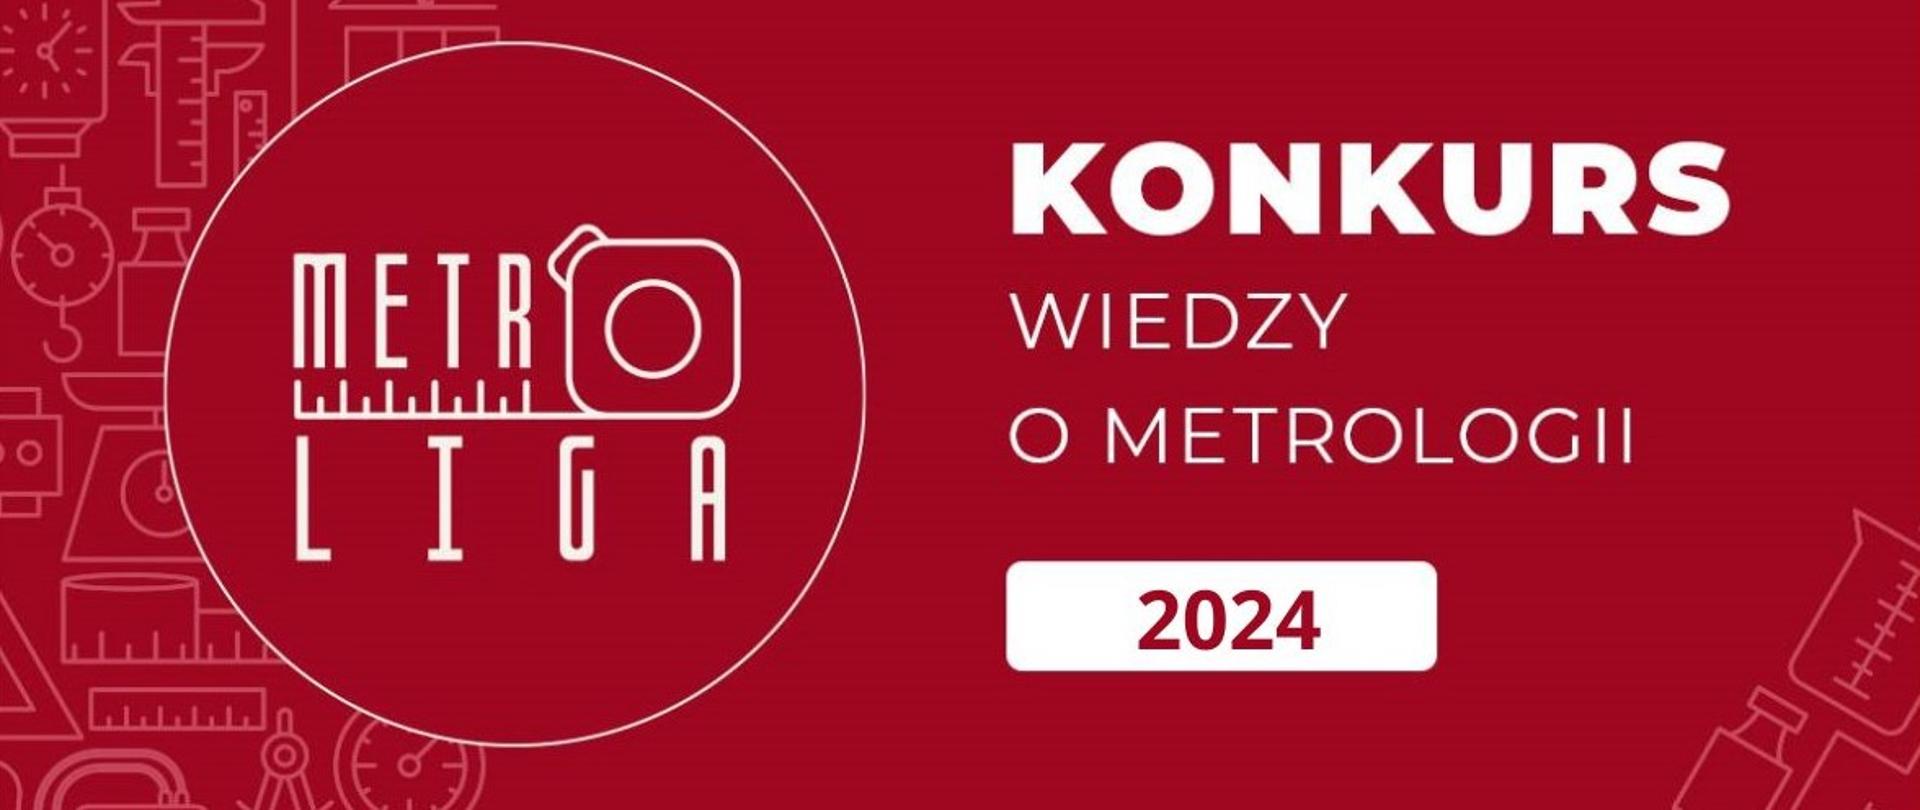 METROLIGA 2024 - Konkurs Wiedzy o Metrologii